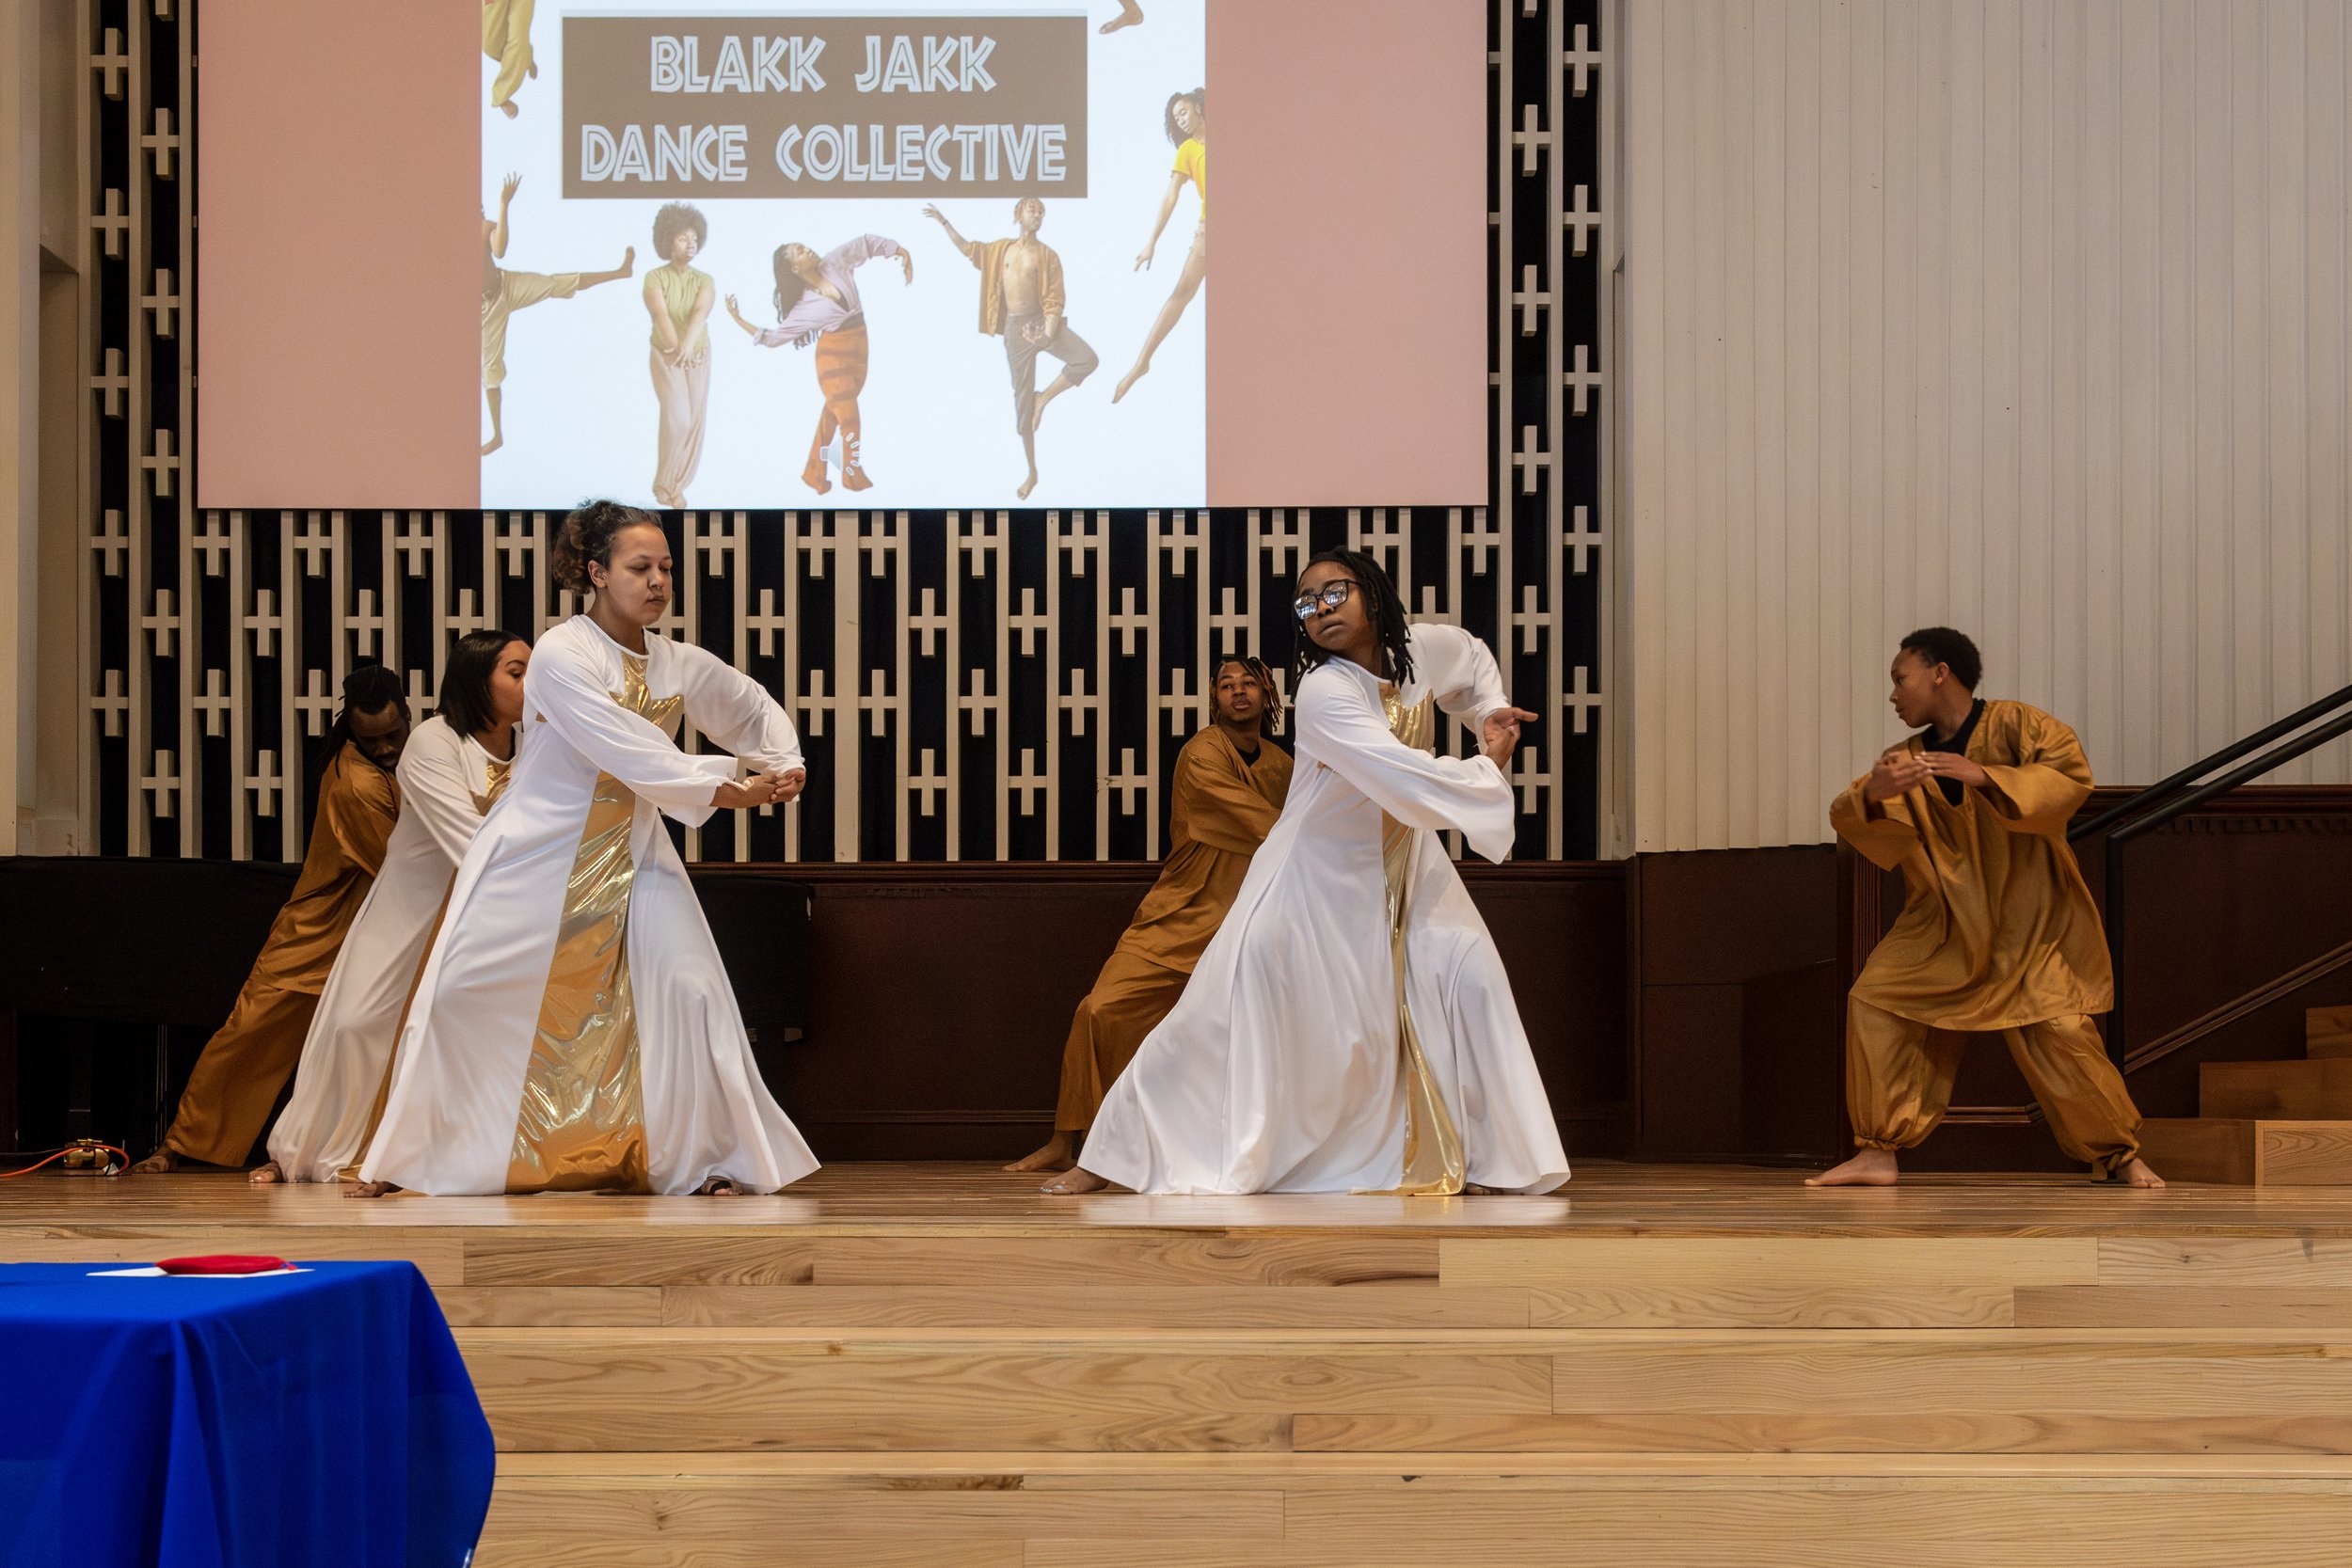 Blakk Jakk Dance Company